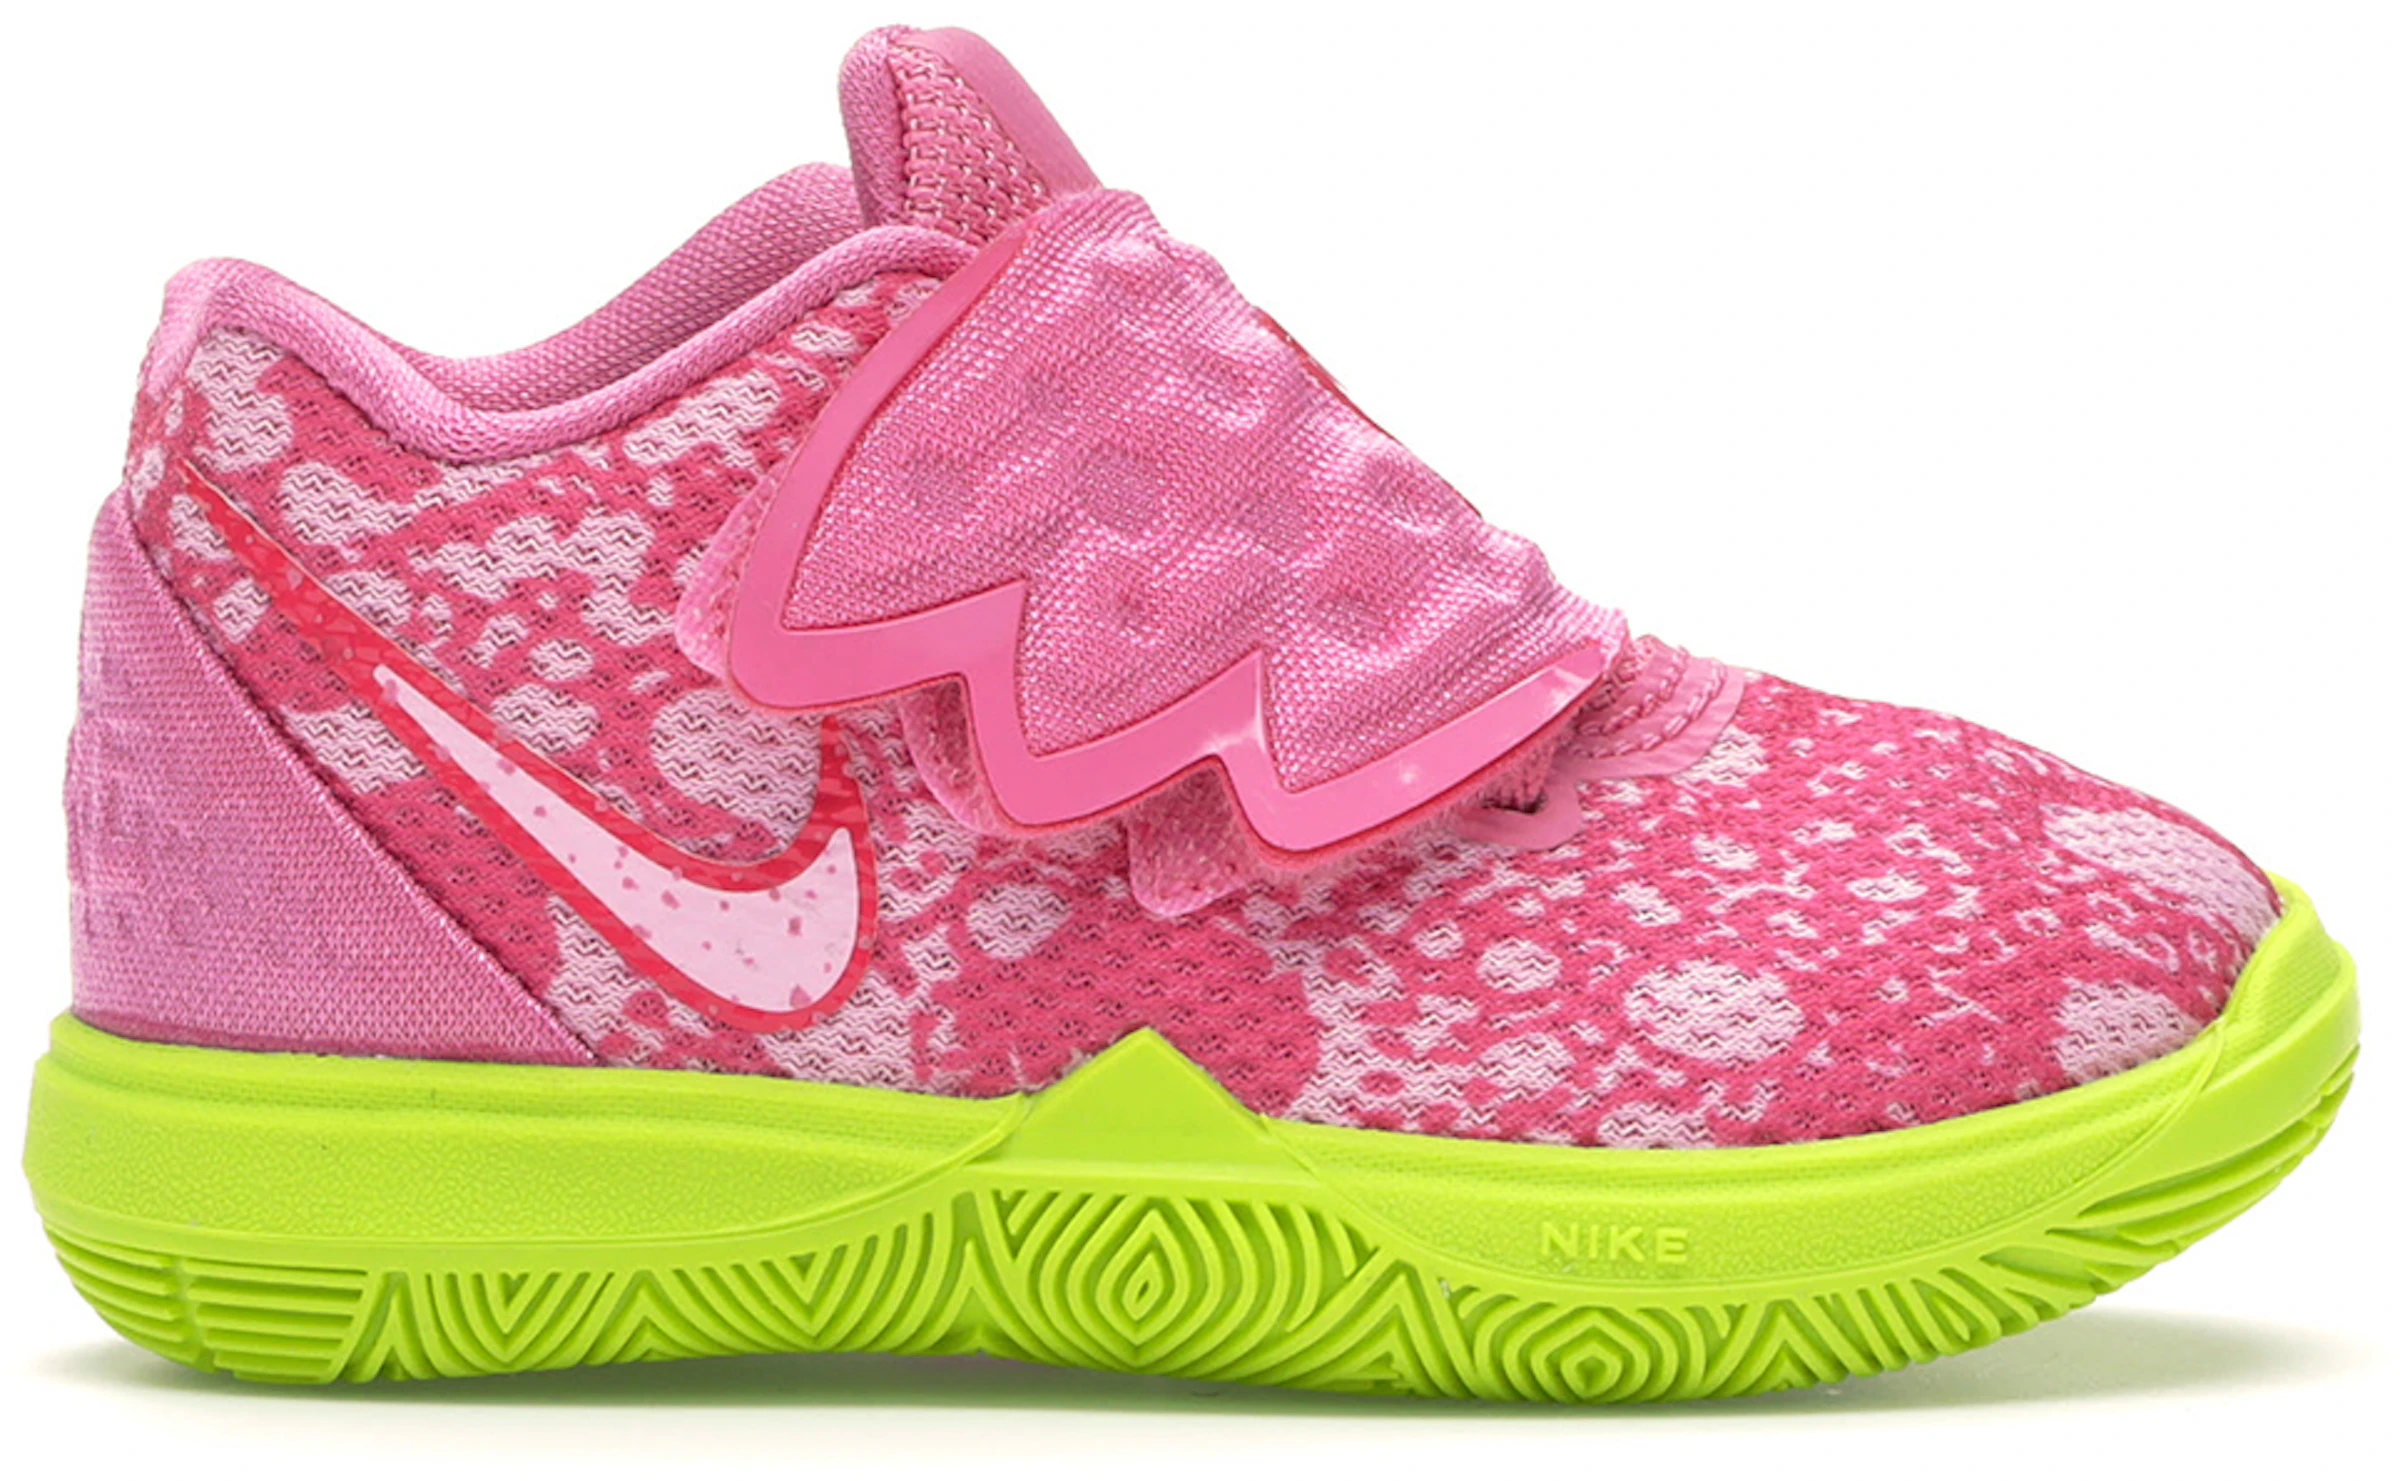 Buy Nike Basketball Spongebob Shoes & New Sneakers - StockX